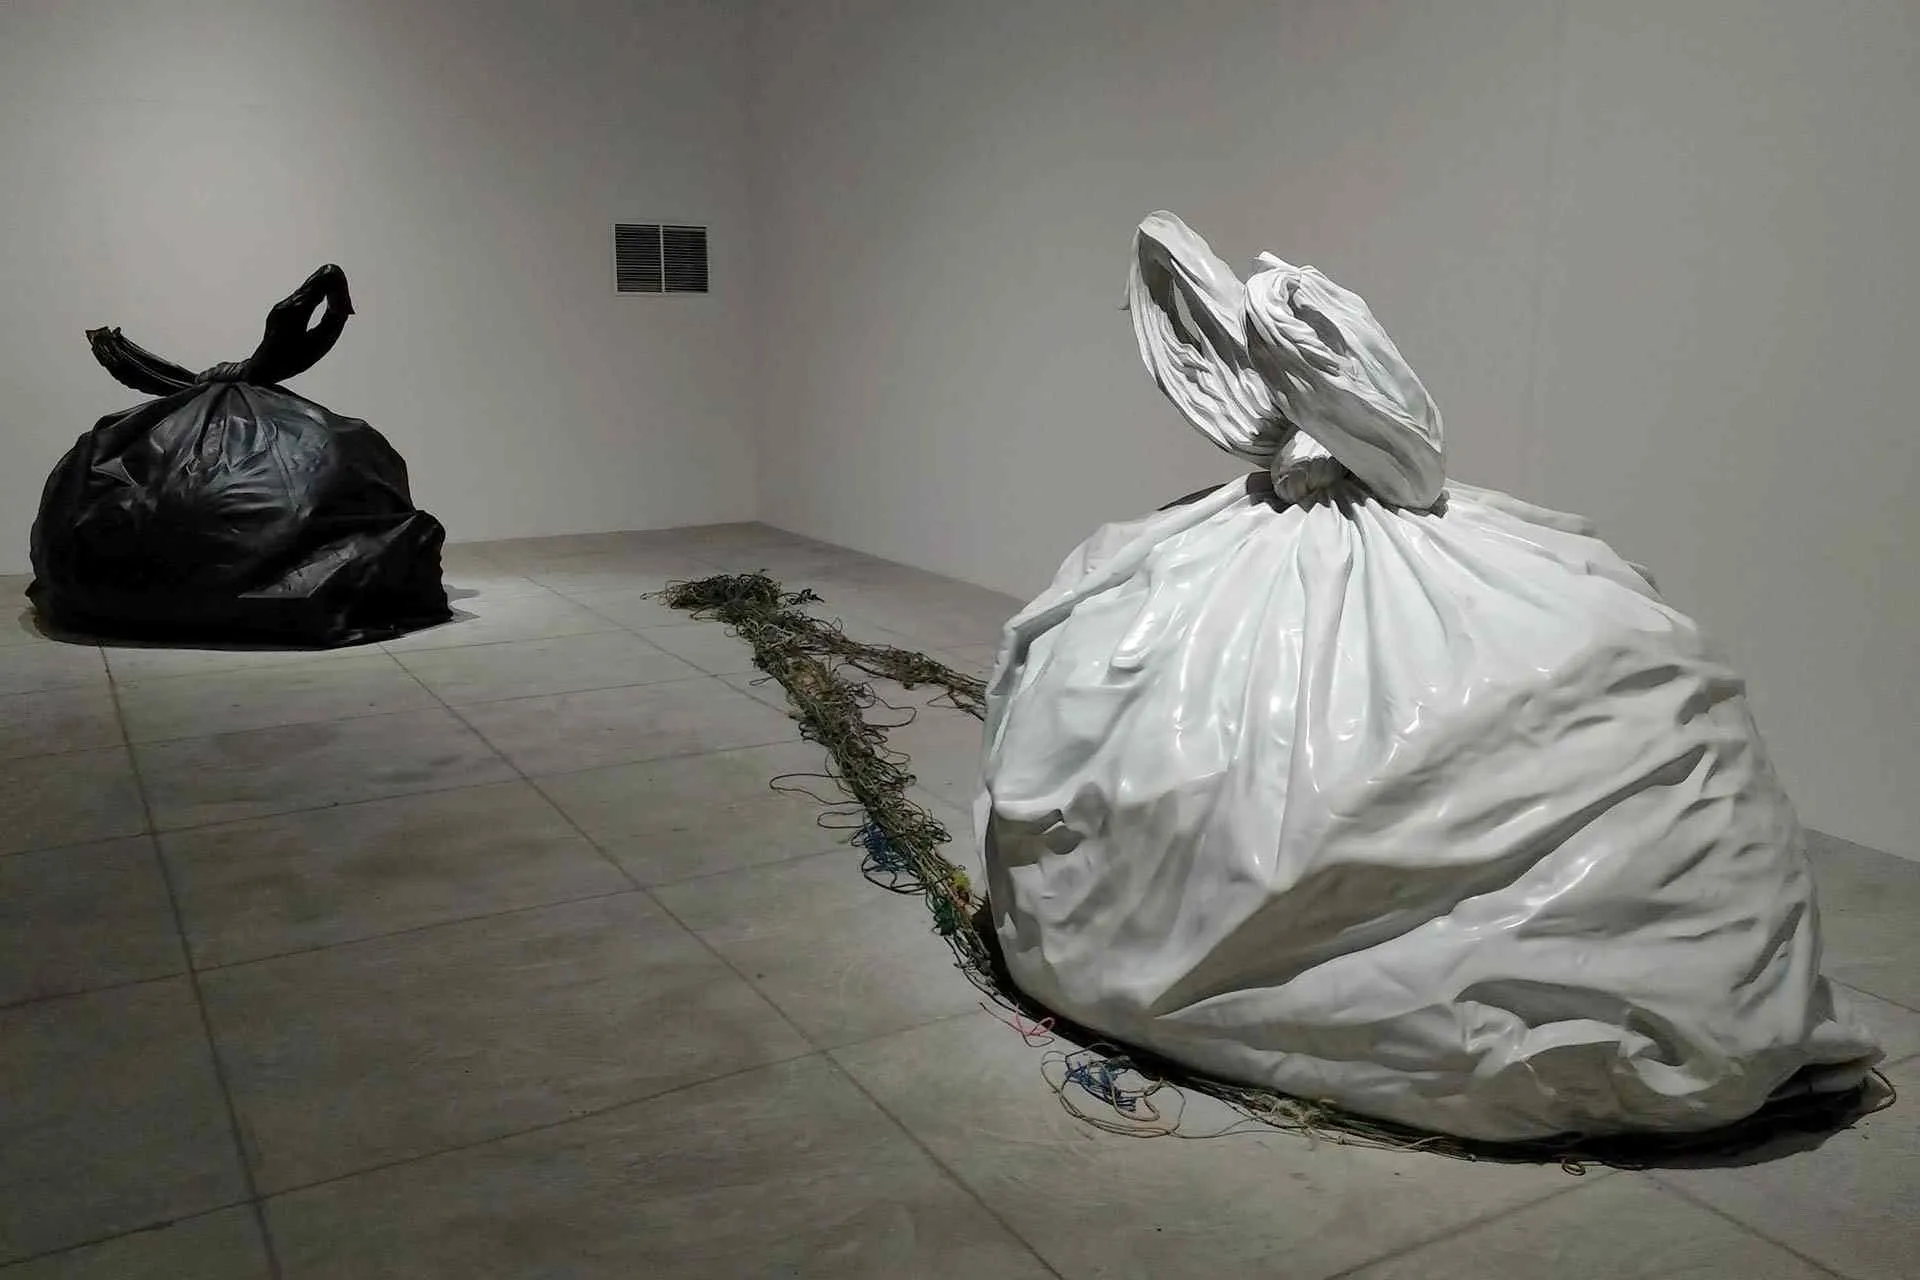 Indonesian contemporary artist Handiwirman Saputra has taken on the responsibility to raise the plastic bag problem. Exhibited at Art Bali - Beyond the Myth